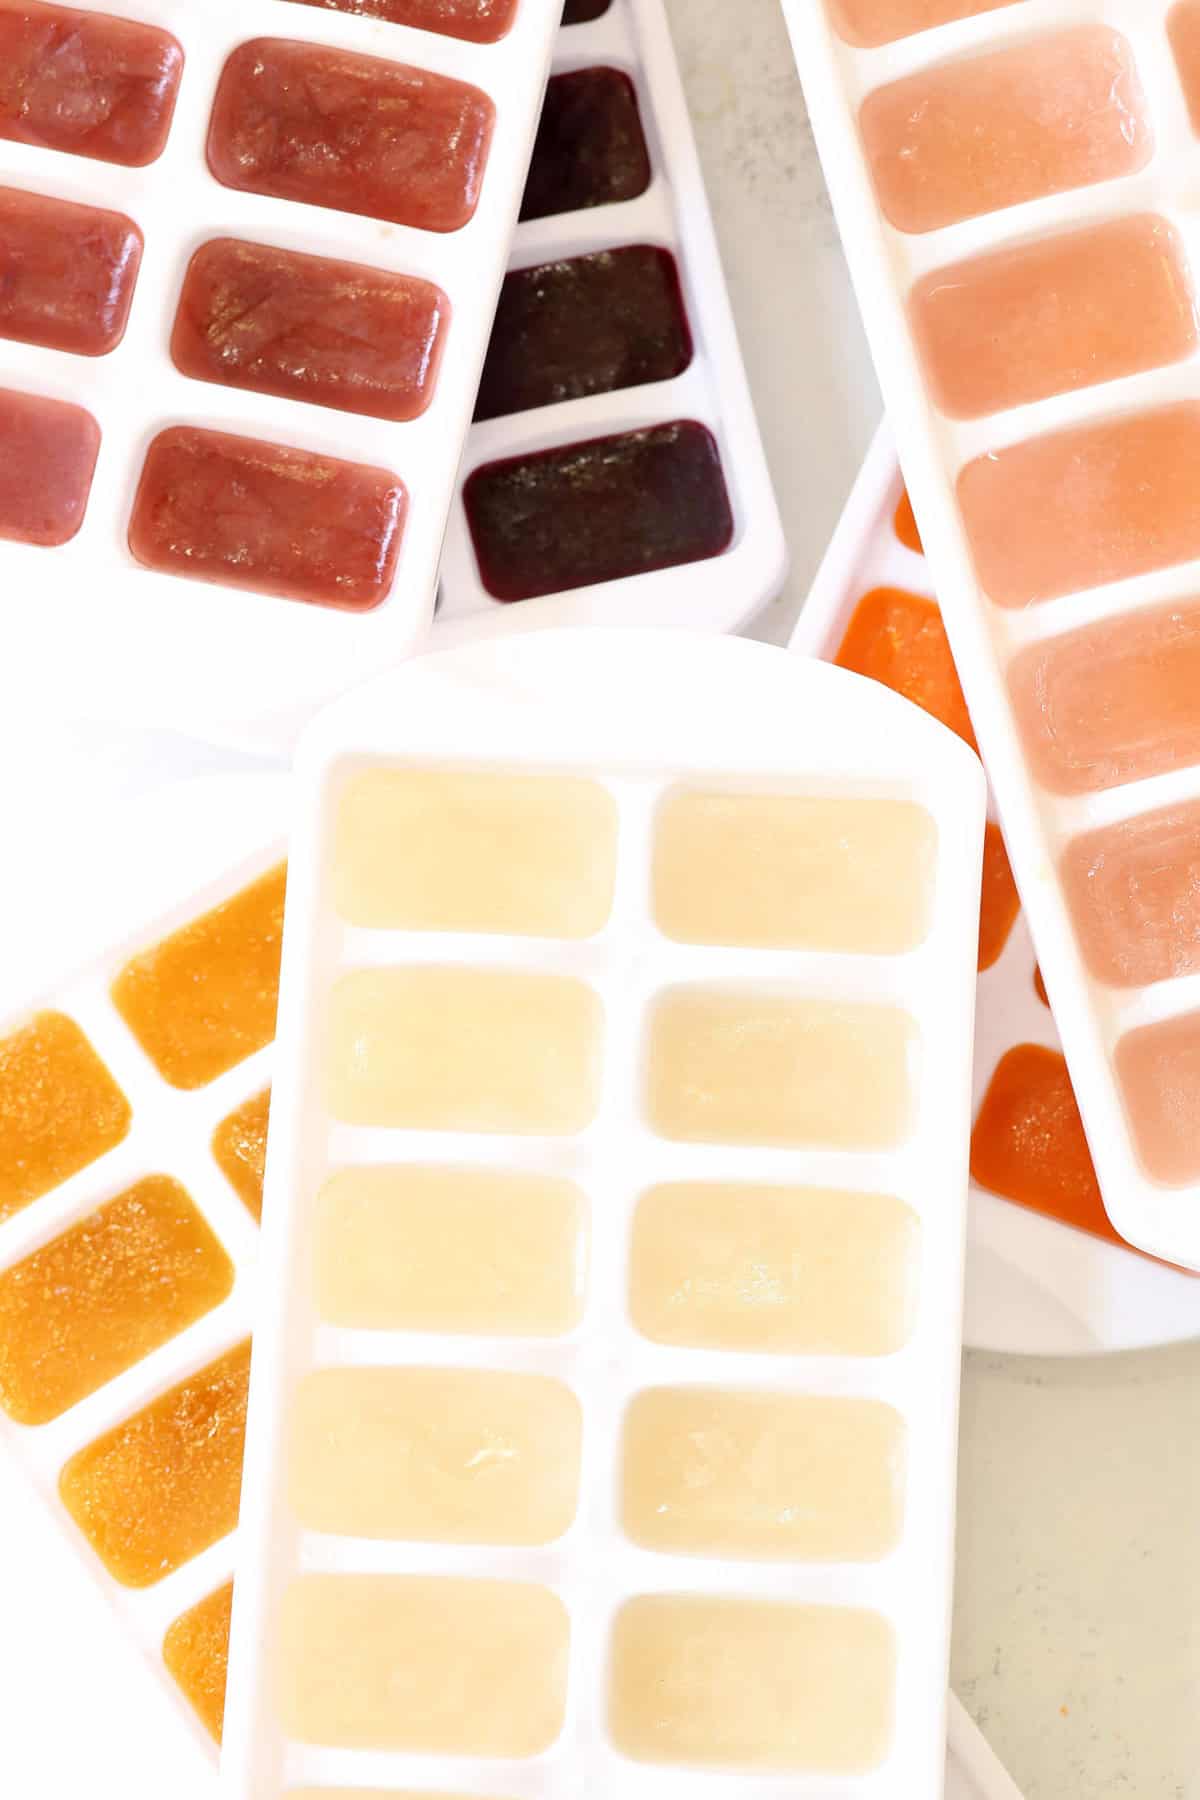 https://www.theharvestkitchen.com/wp-content/uploads/2018/04/juice-cubes-trays-scaled.jpg